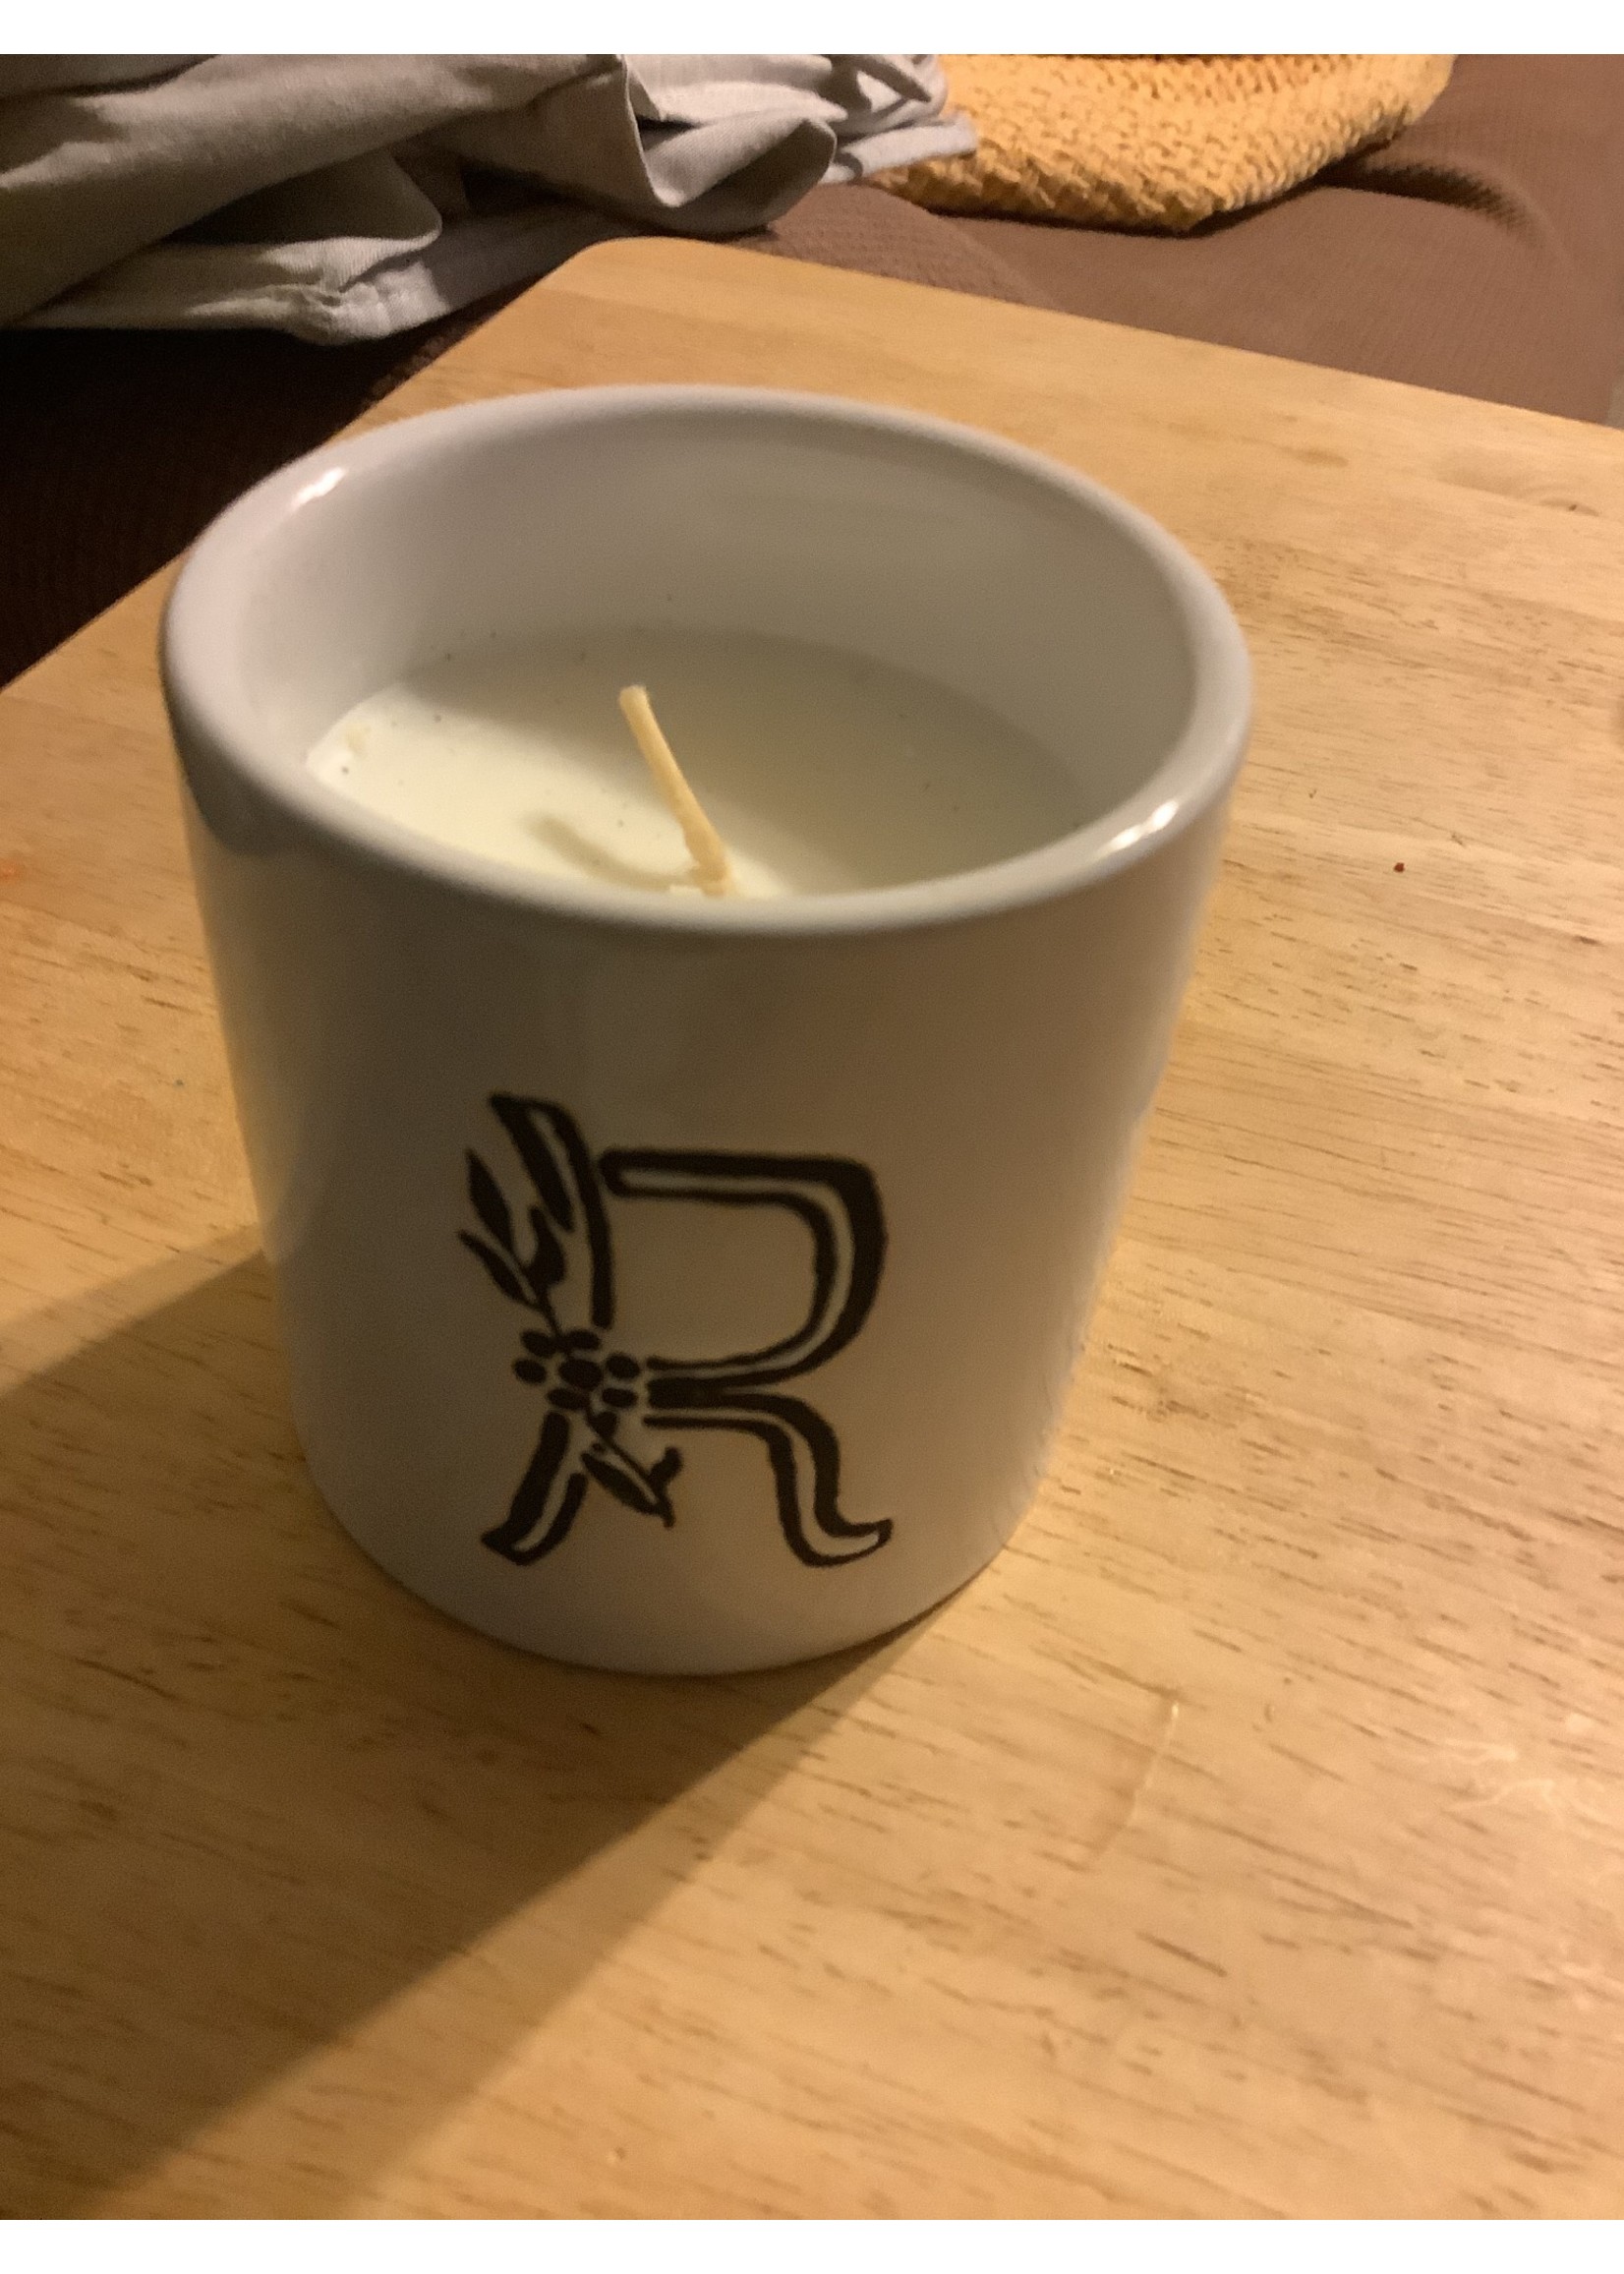 “R” monogrammed Sandlewood 4 oz Ceramic Candle